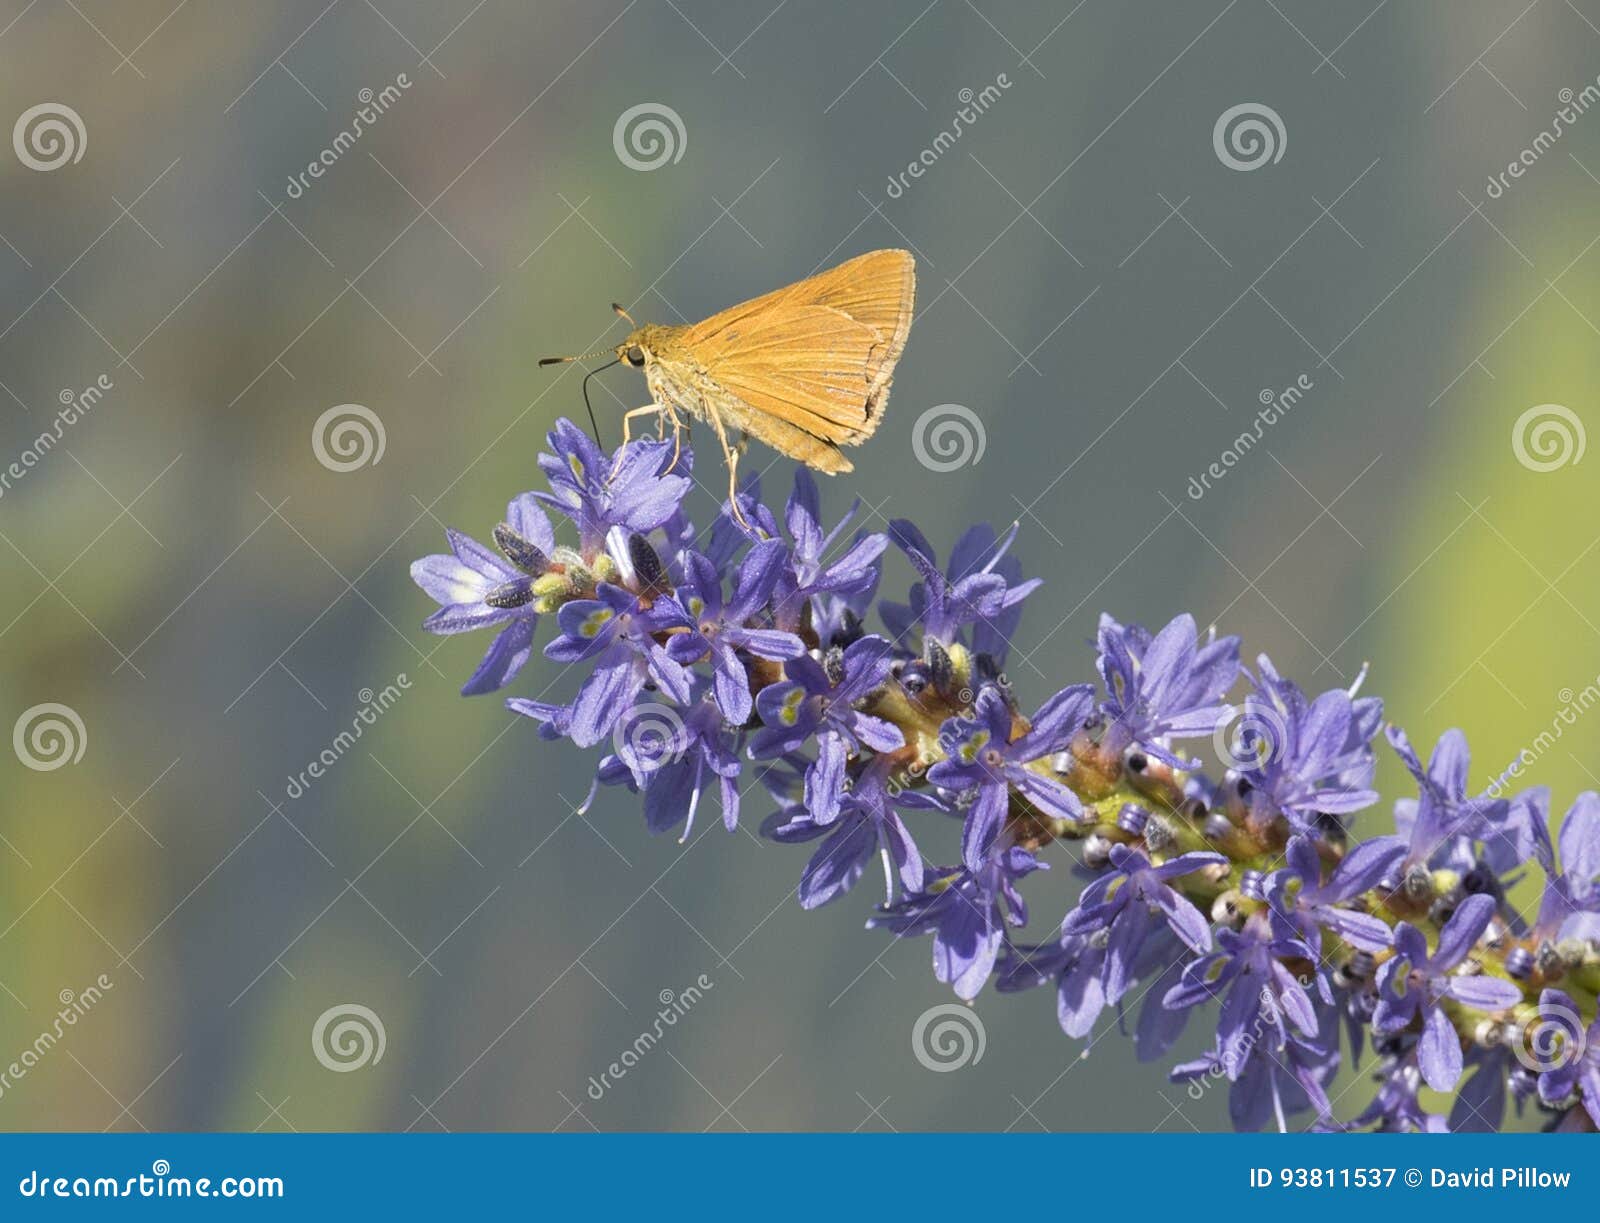 small arogos skipper butterfly on pickerelweed